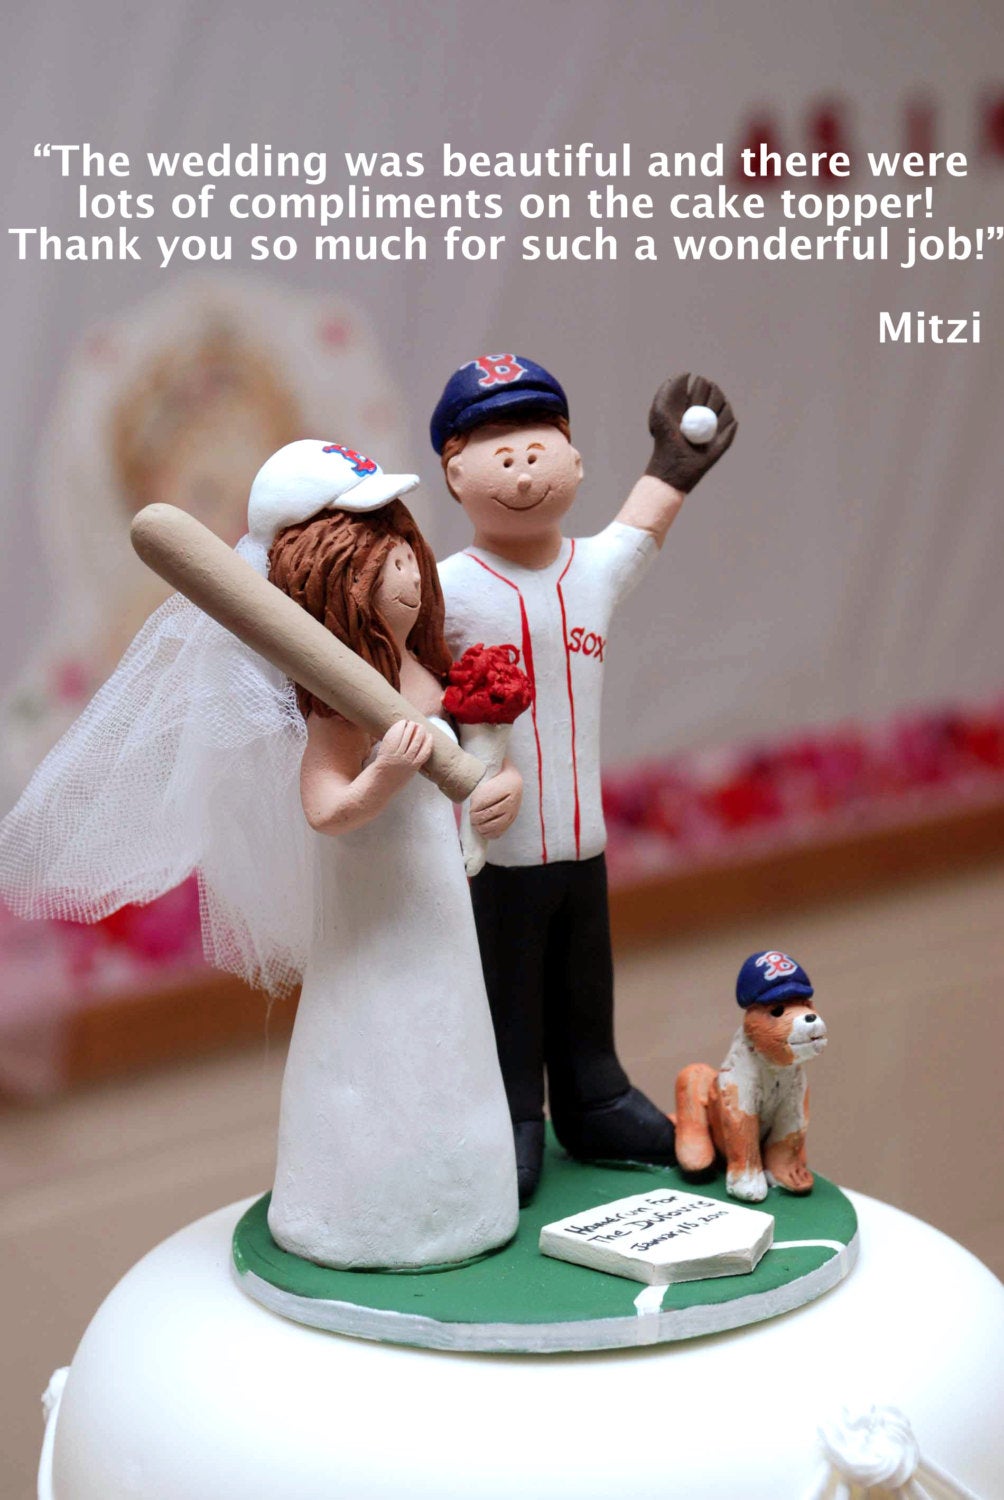 Yankees Bride and Groom Baseball Wedding Cake Topper, Yankees Baseball Wedding Anniversary Cake Topper, Yankees Wedding Anniversary Gift. - iWeddingCakeToppers